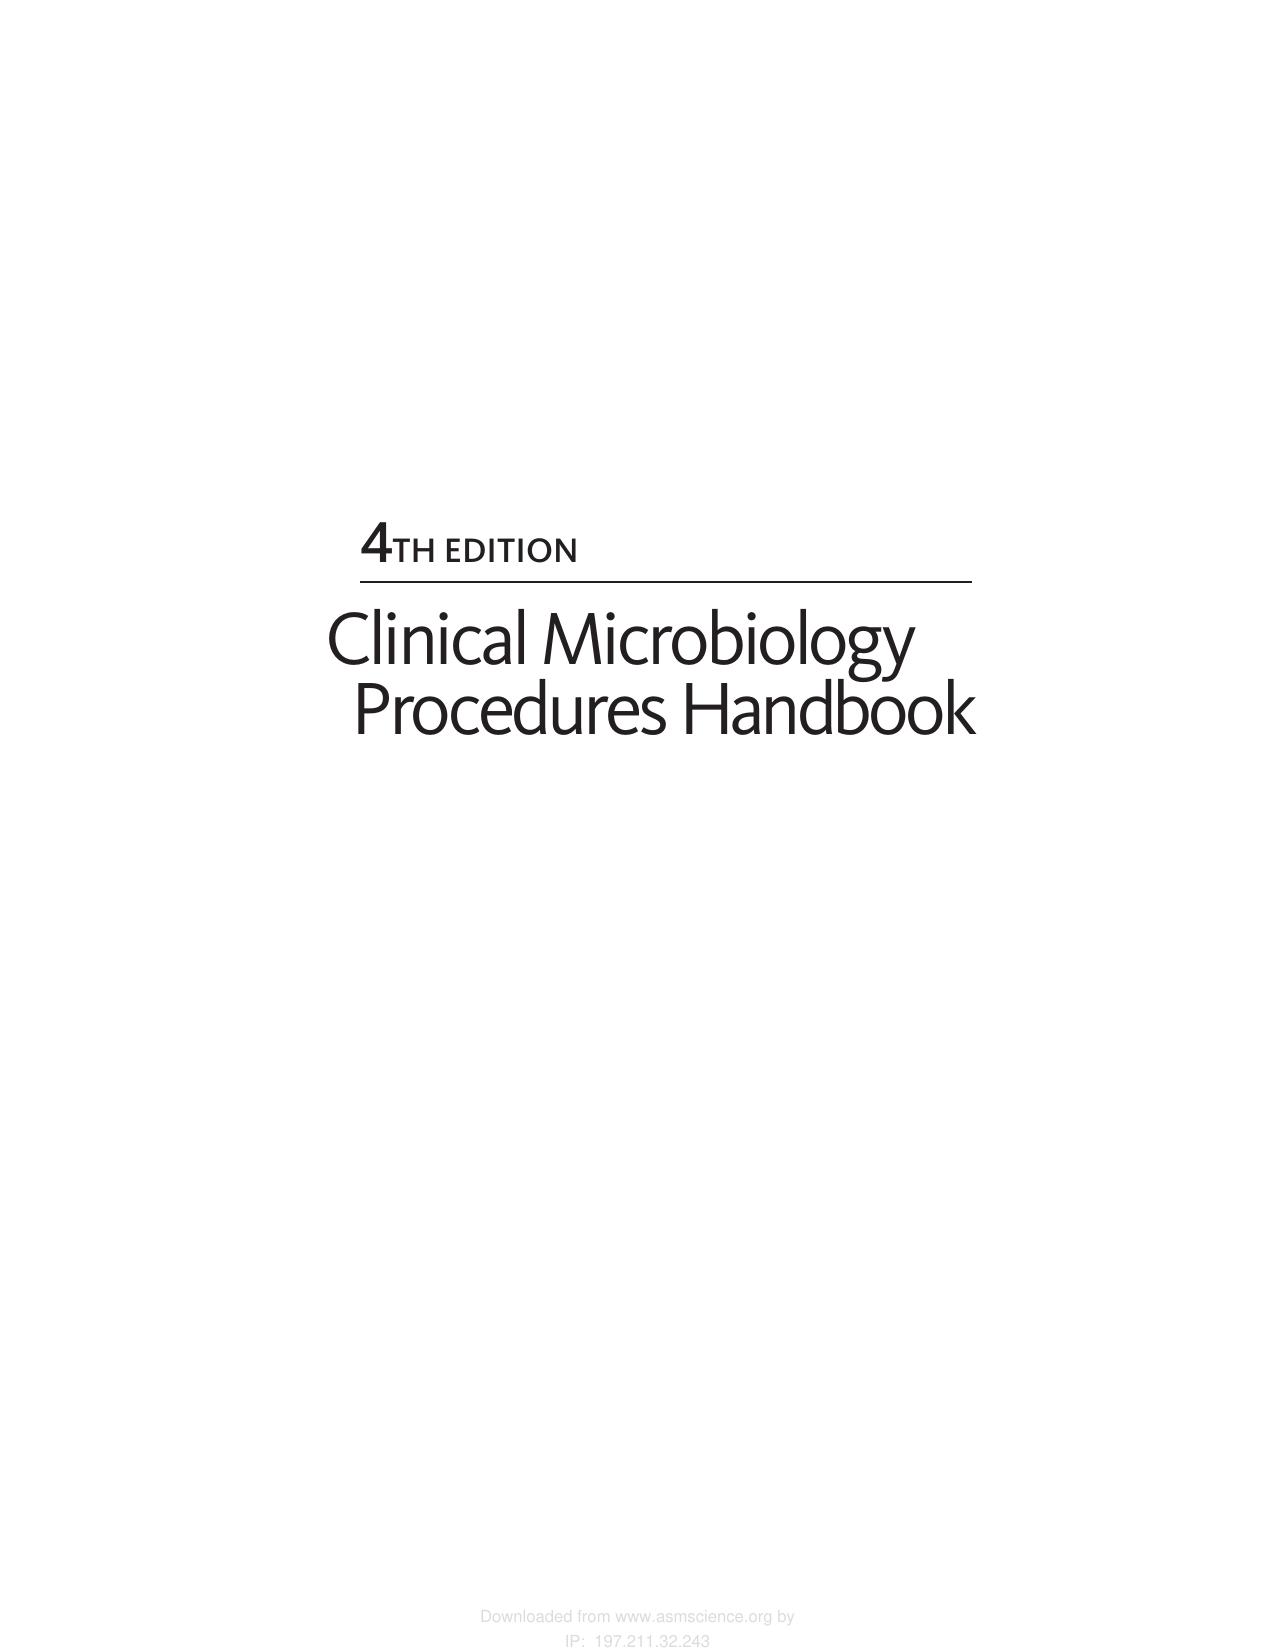 Clinical Microbiology Procedures Handbook 4th ed. 2016.pdf